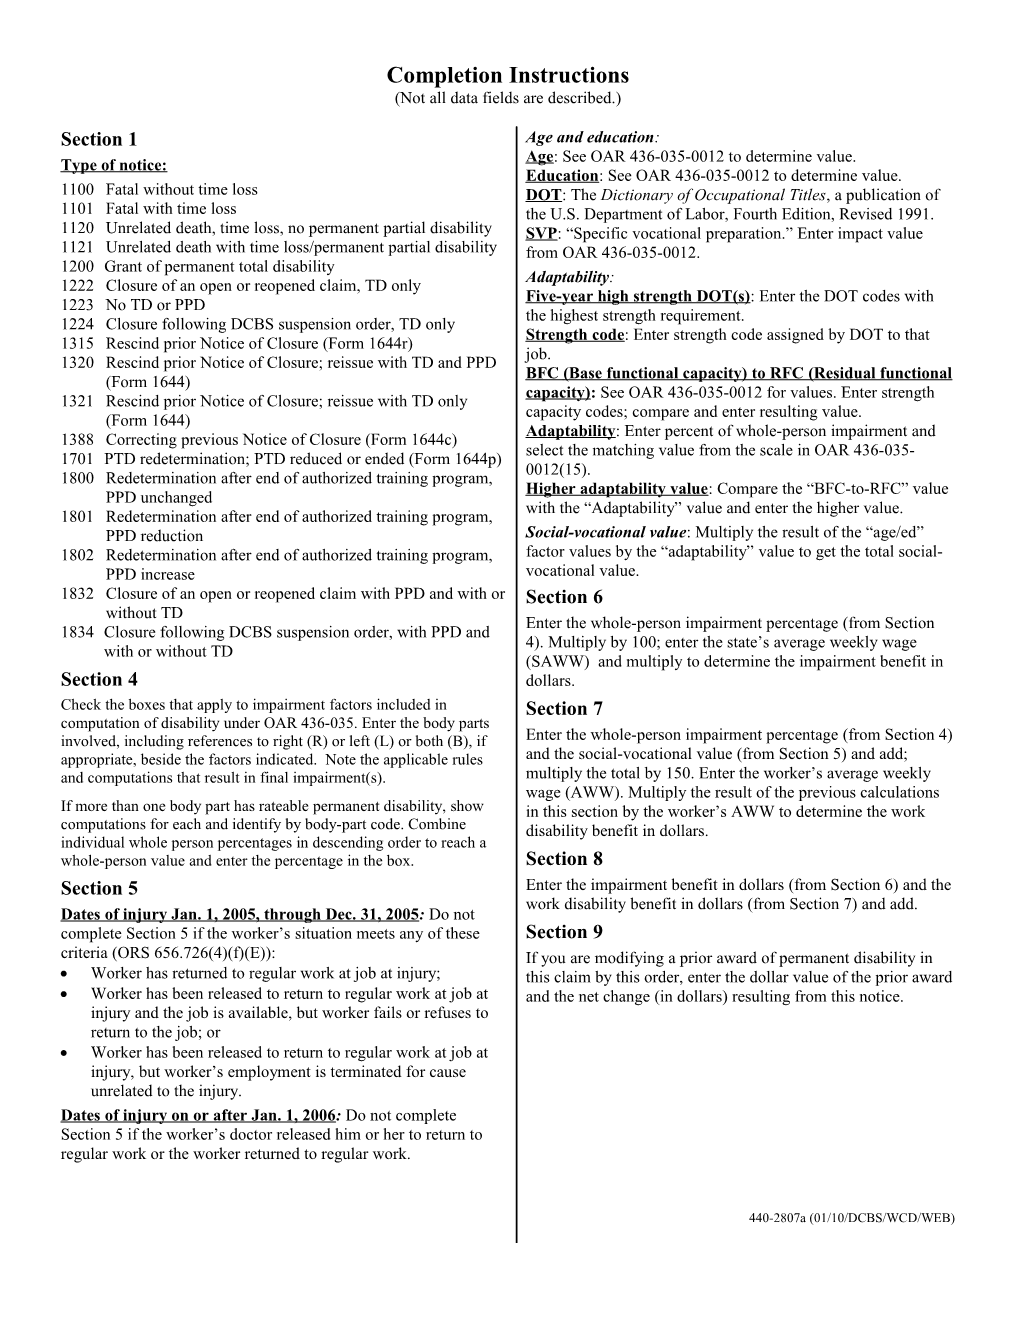 Insurer Notice of Closure Worksheet (Dates of Injury on Or After Jan. 1, 2005)